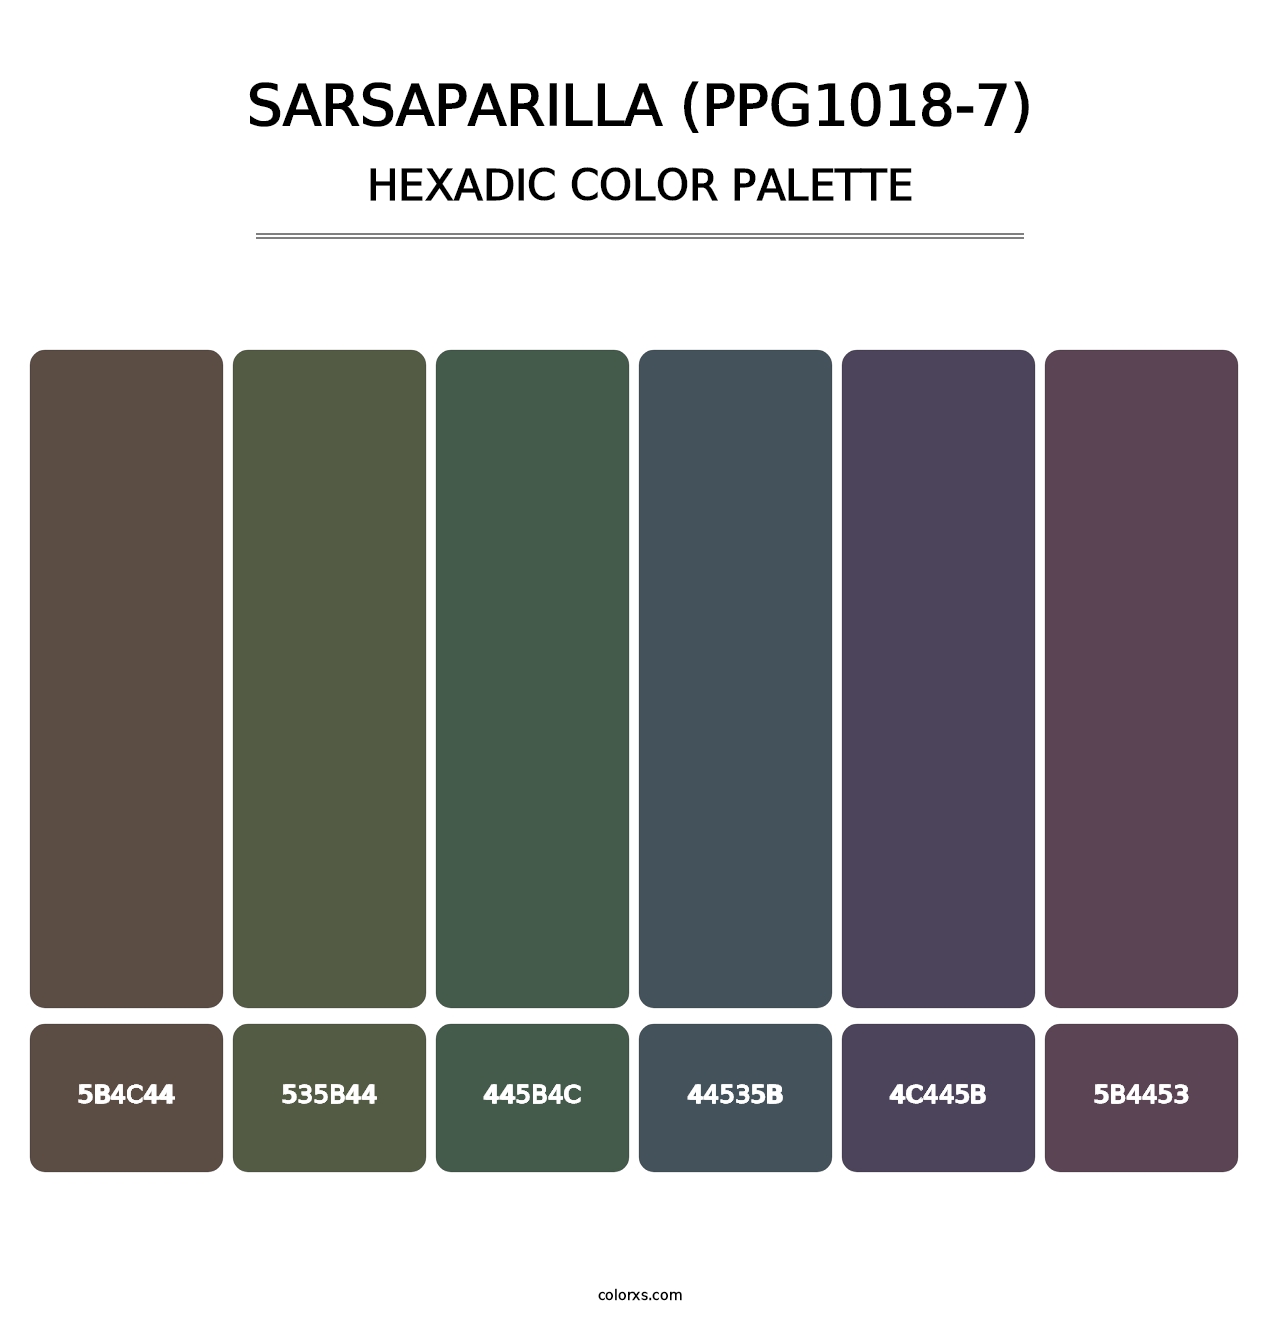 Sarsaparilla (PPG1018-7) - Hexadic Color Palette